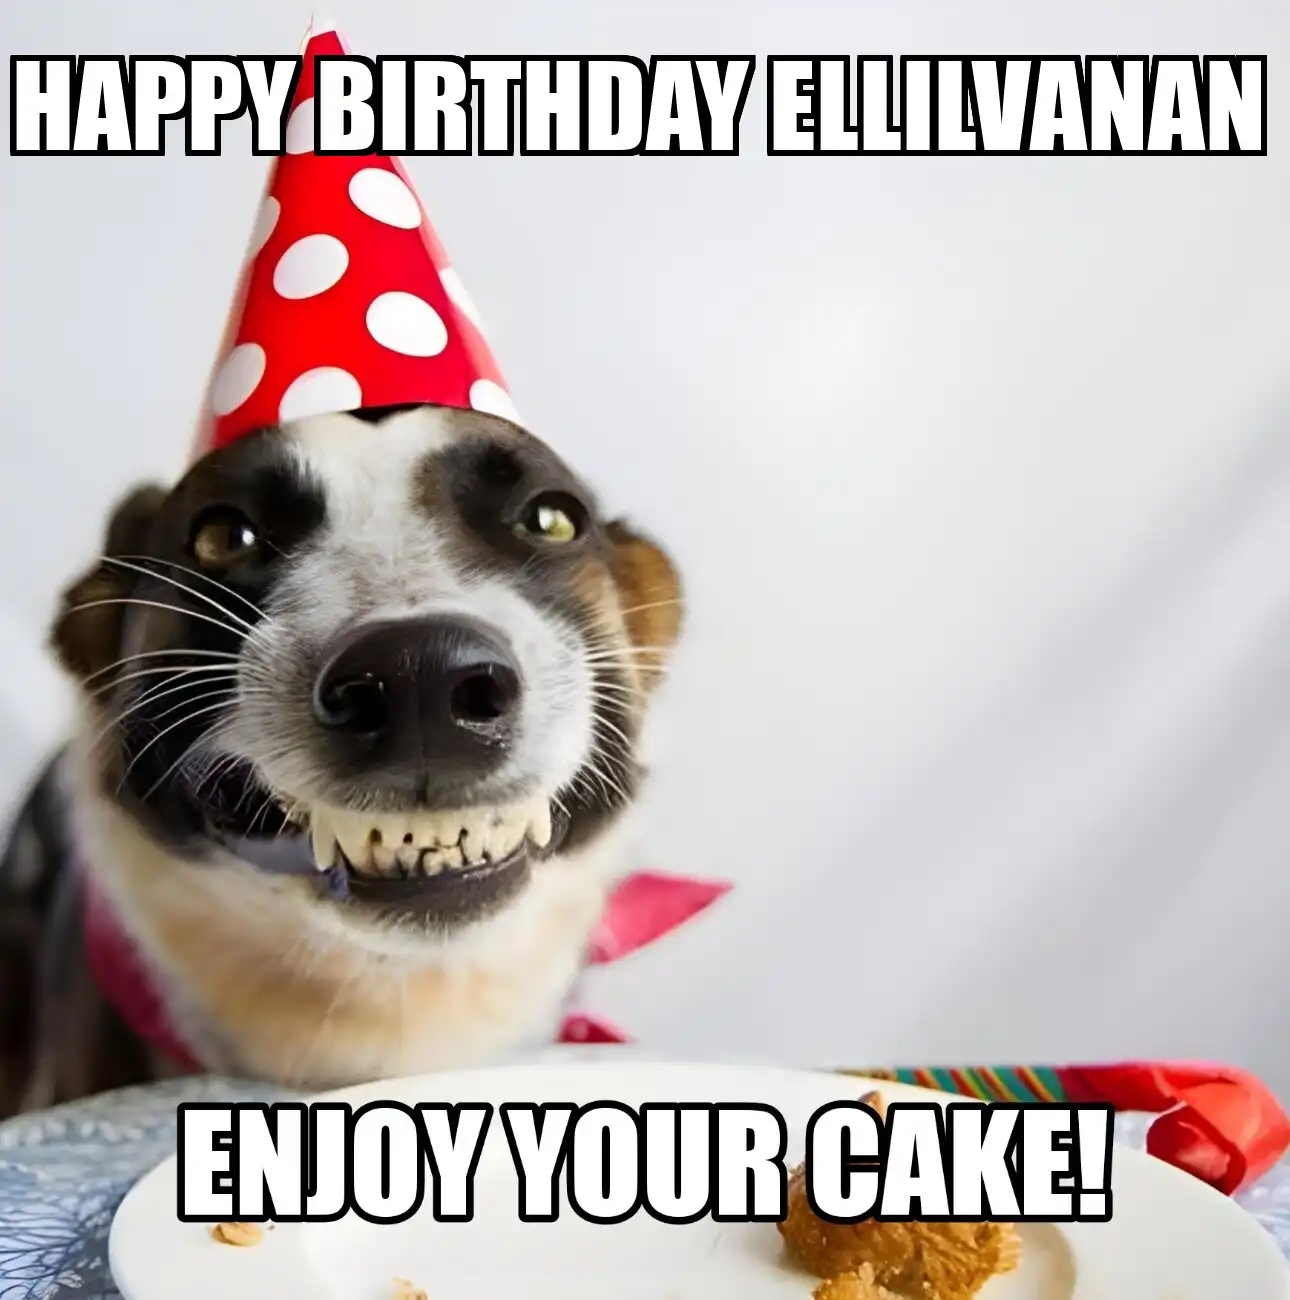 Happy Birthday Ellilvanan Enjoy Your Cake Dog Meme